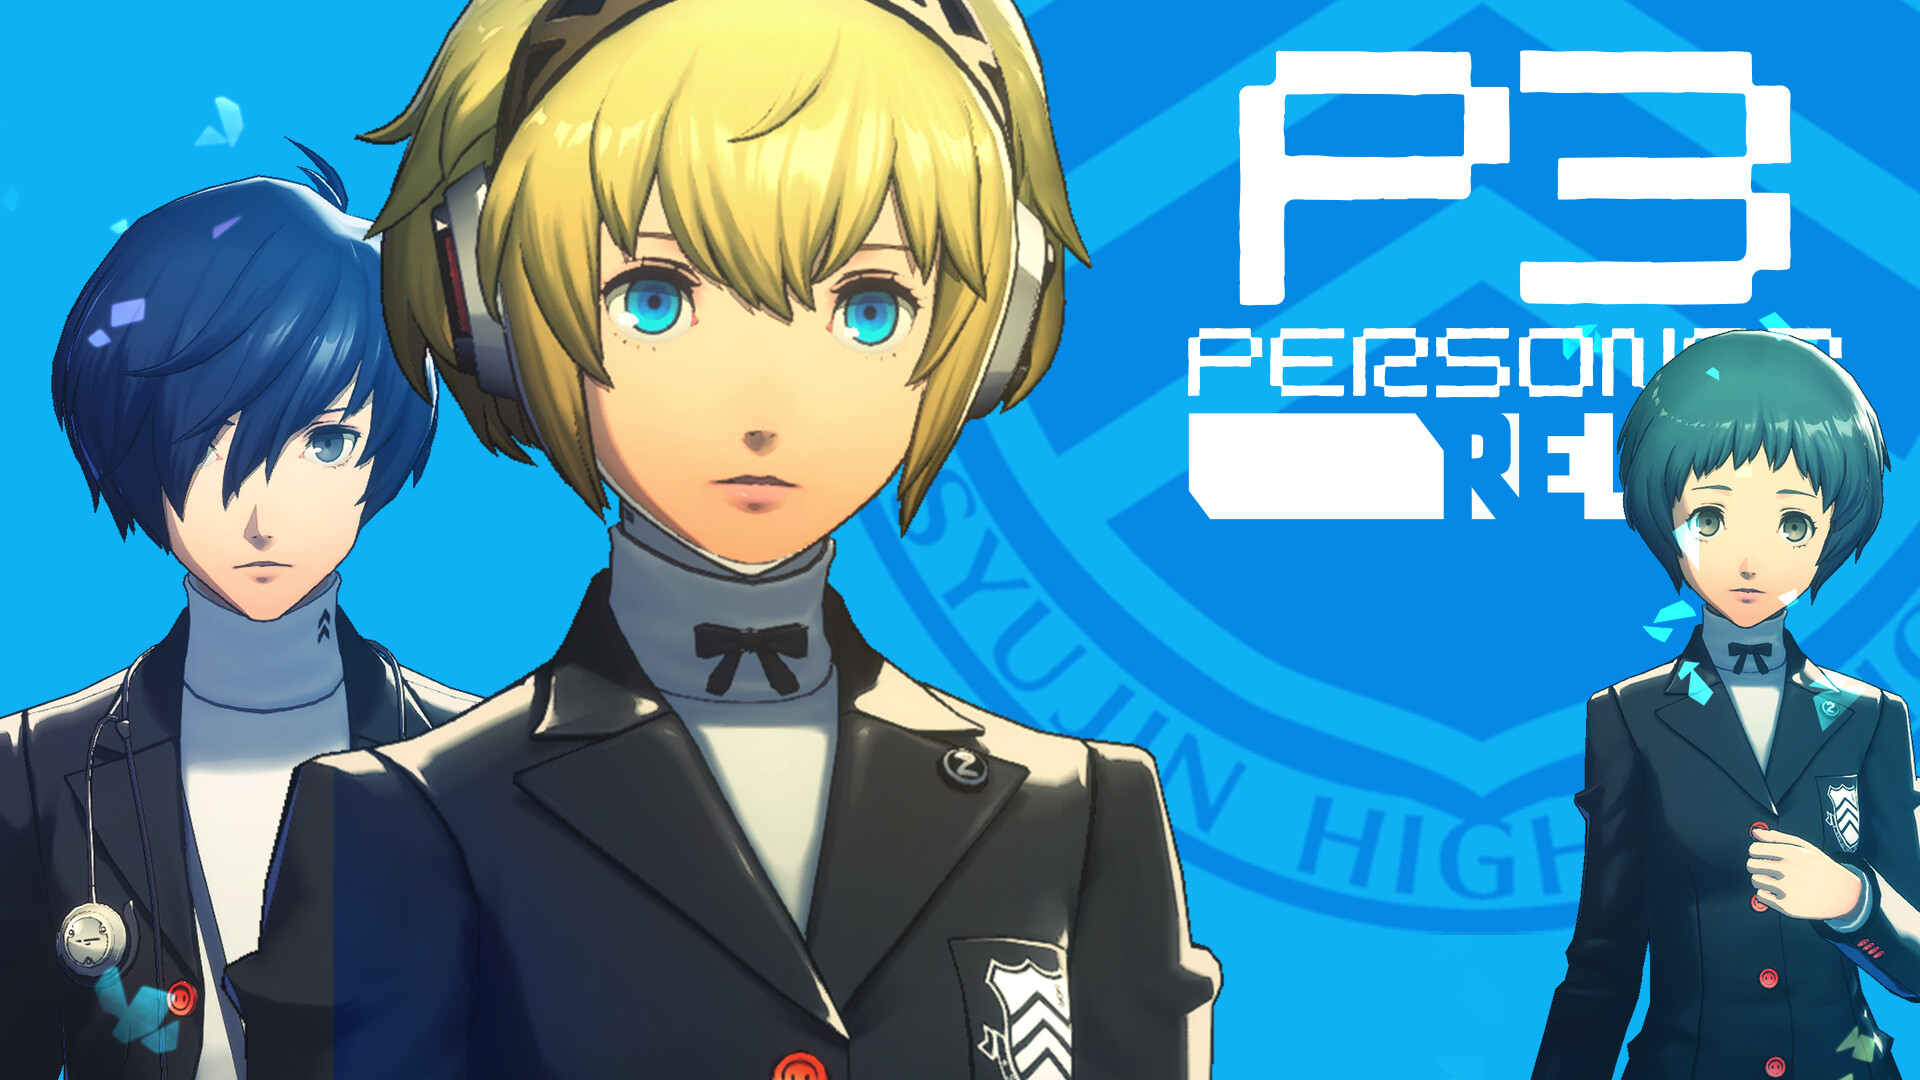 Comunidade Steam :: Persona 5 Royal